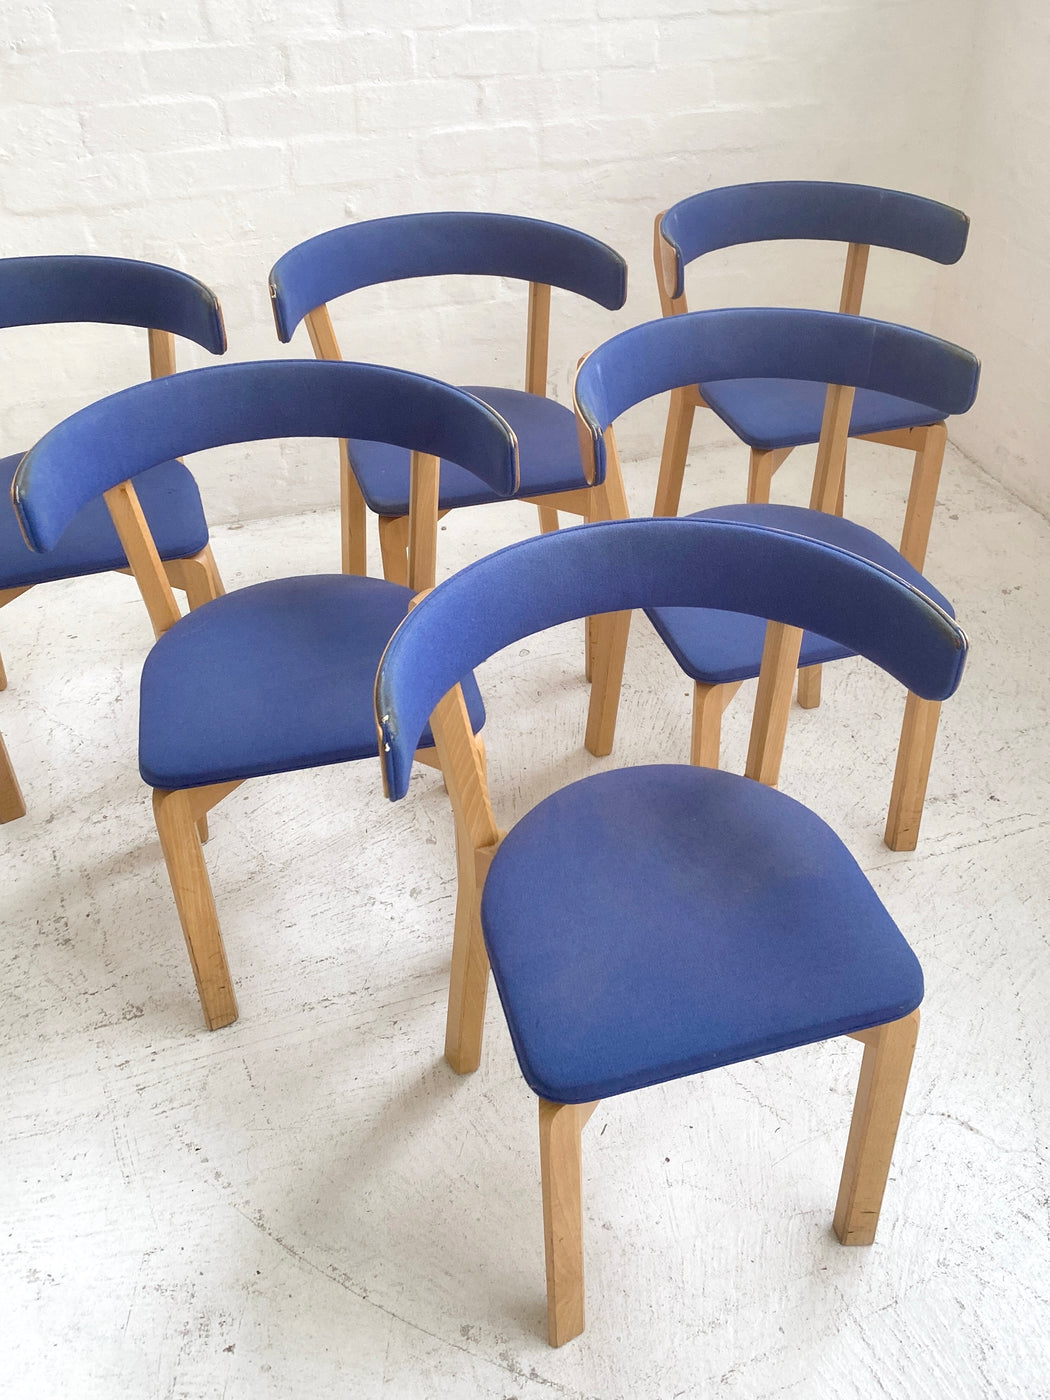 Jorgen Gammelgaard 'Crestrail' Chairs